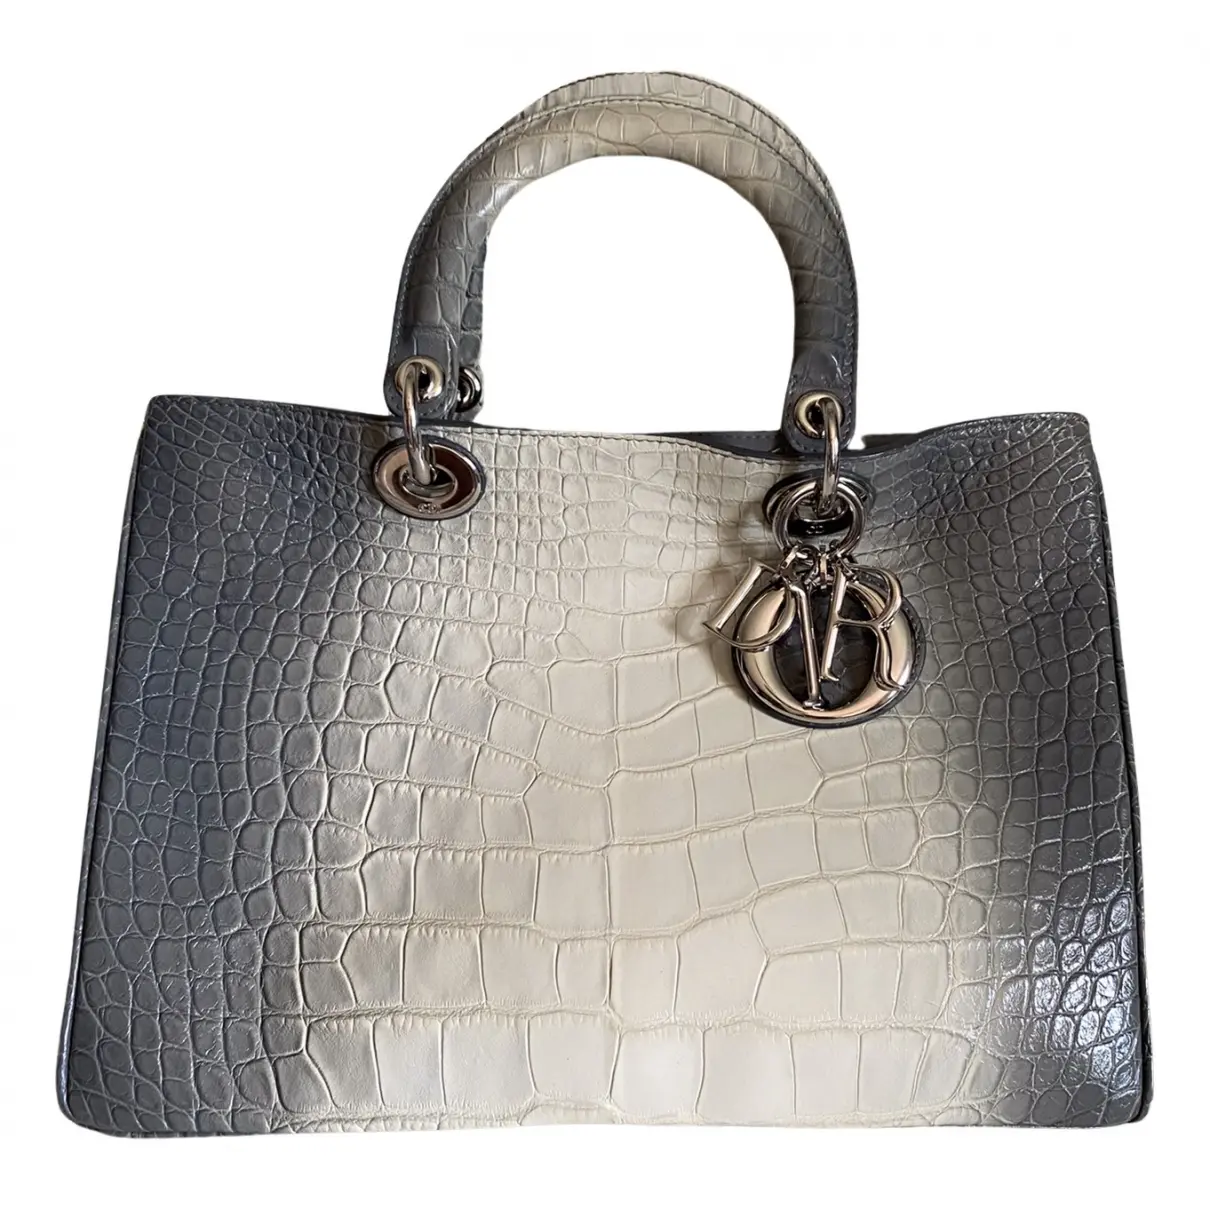 Lady Dior crocodile handbag Dior